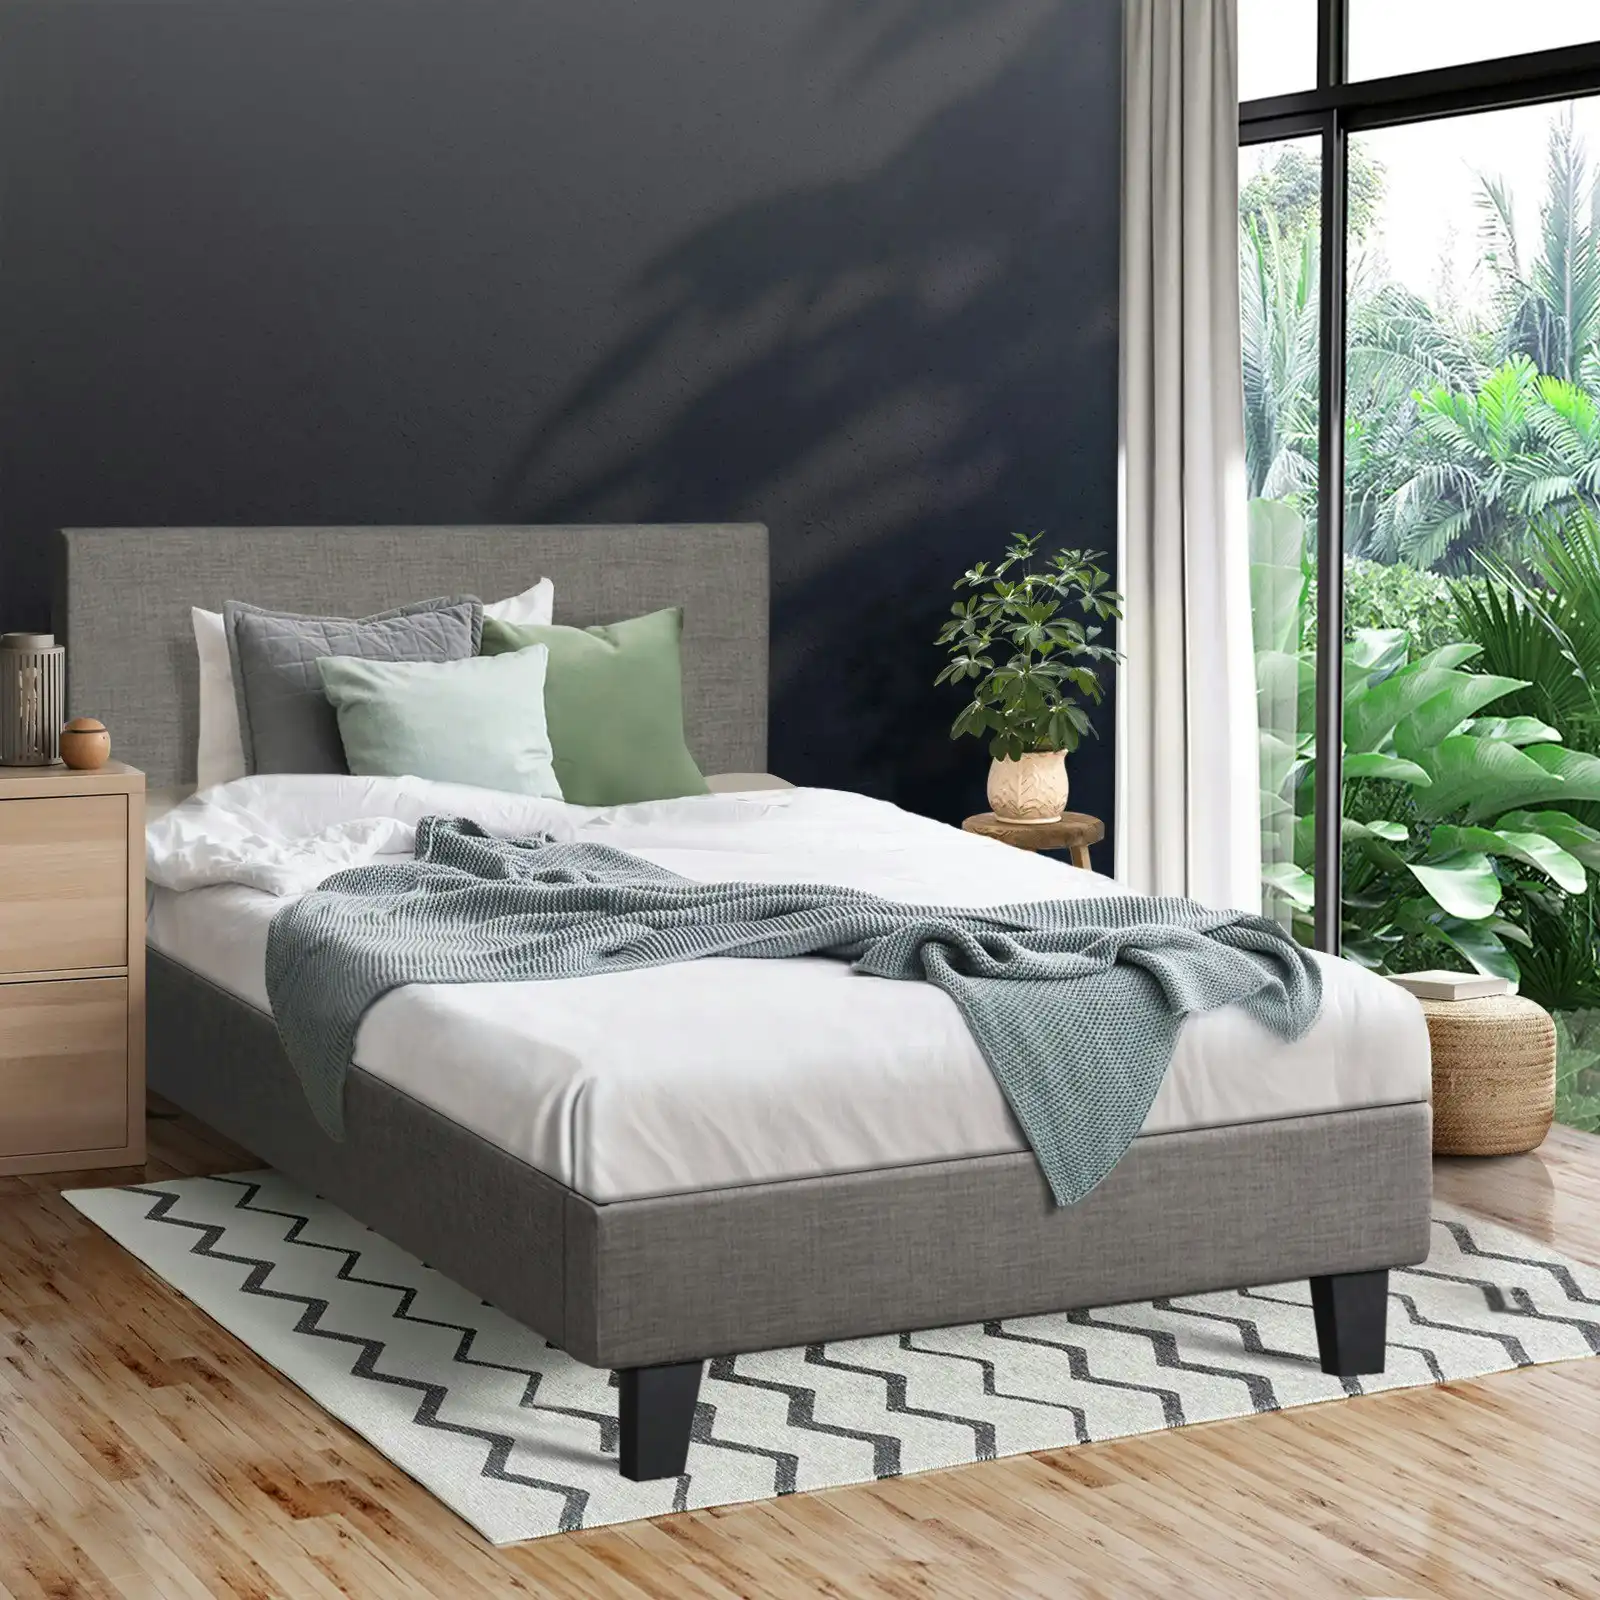 Oikiture Bed Frame King Single Size Mattress Base Platform Wooden Slats Fabric